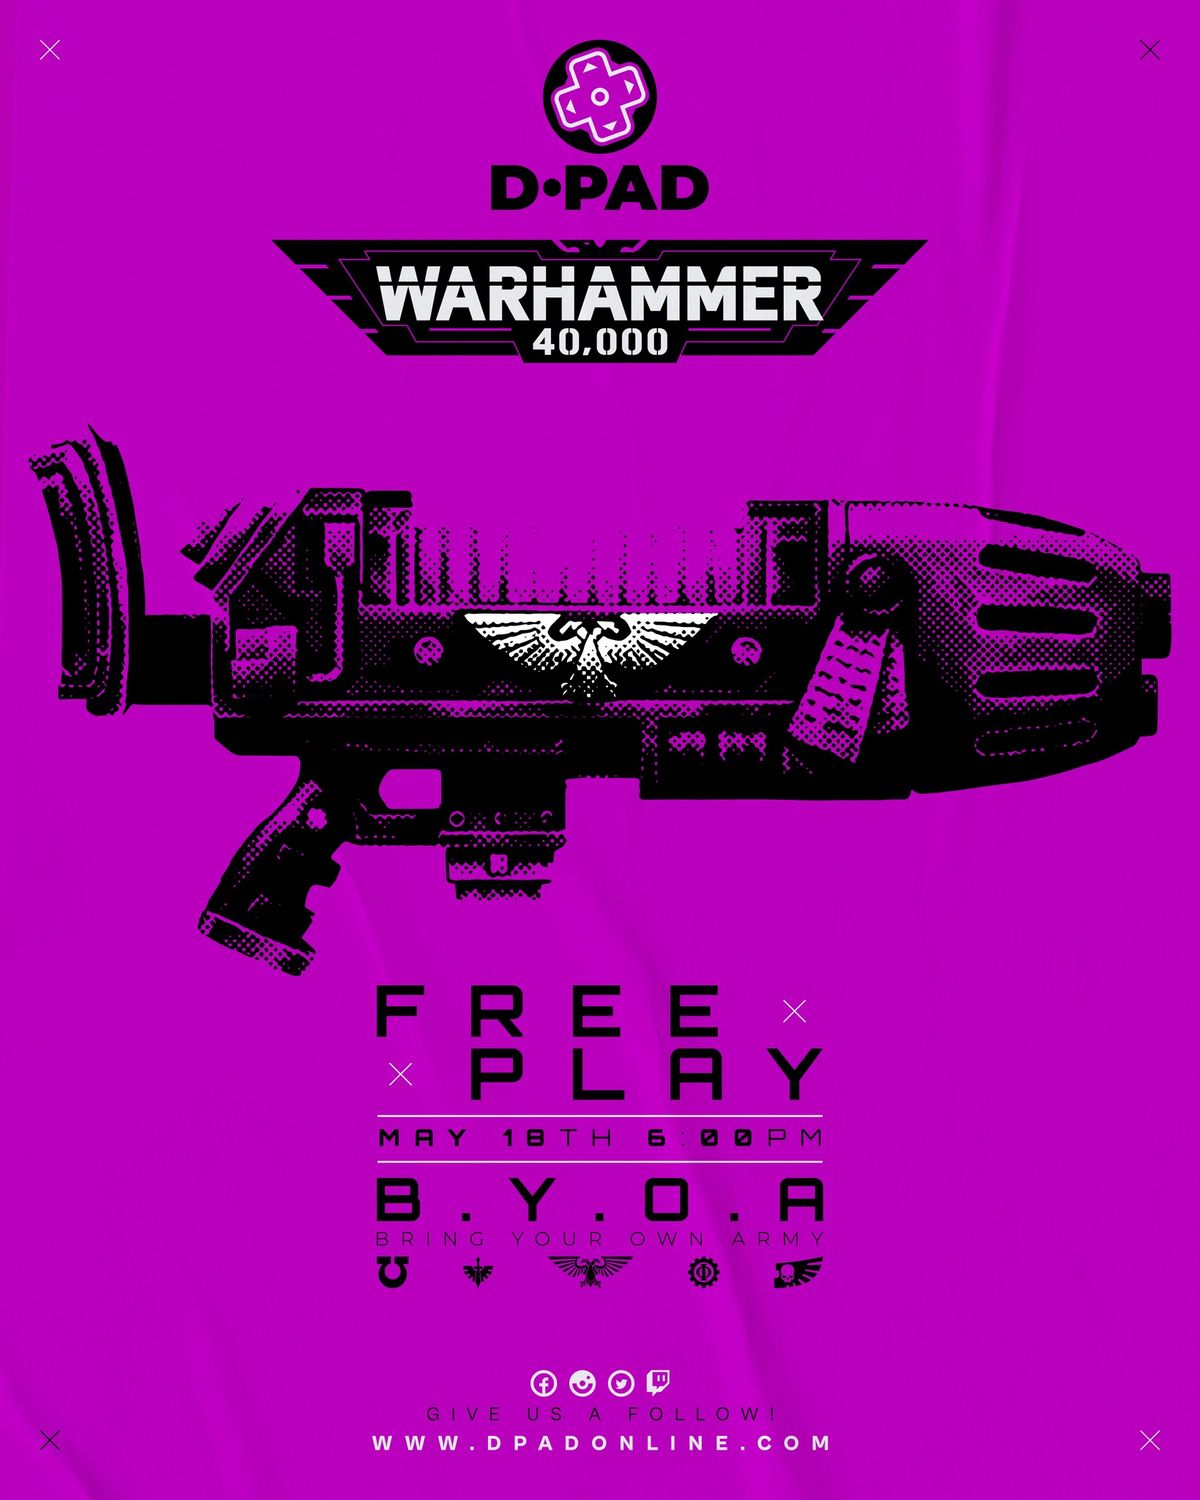 BYOA Warhammer 40k - FREE PLAY